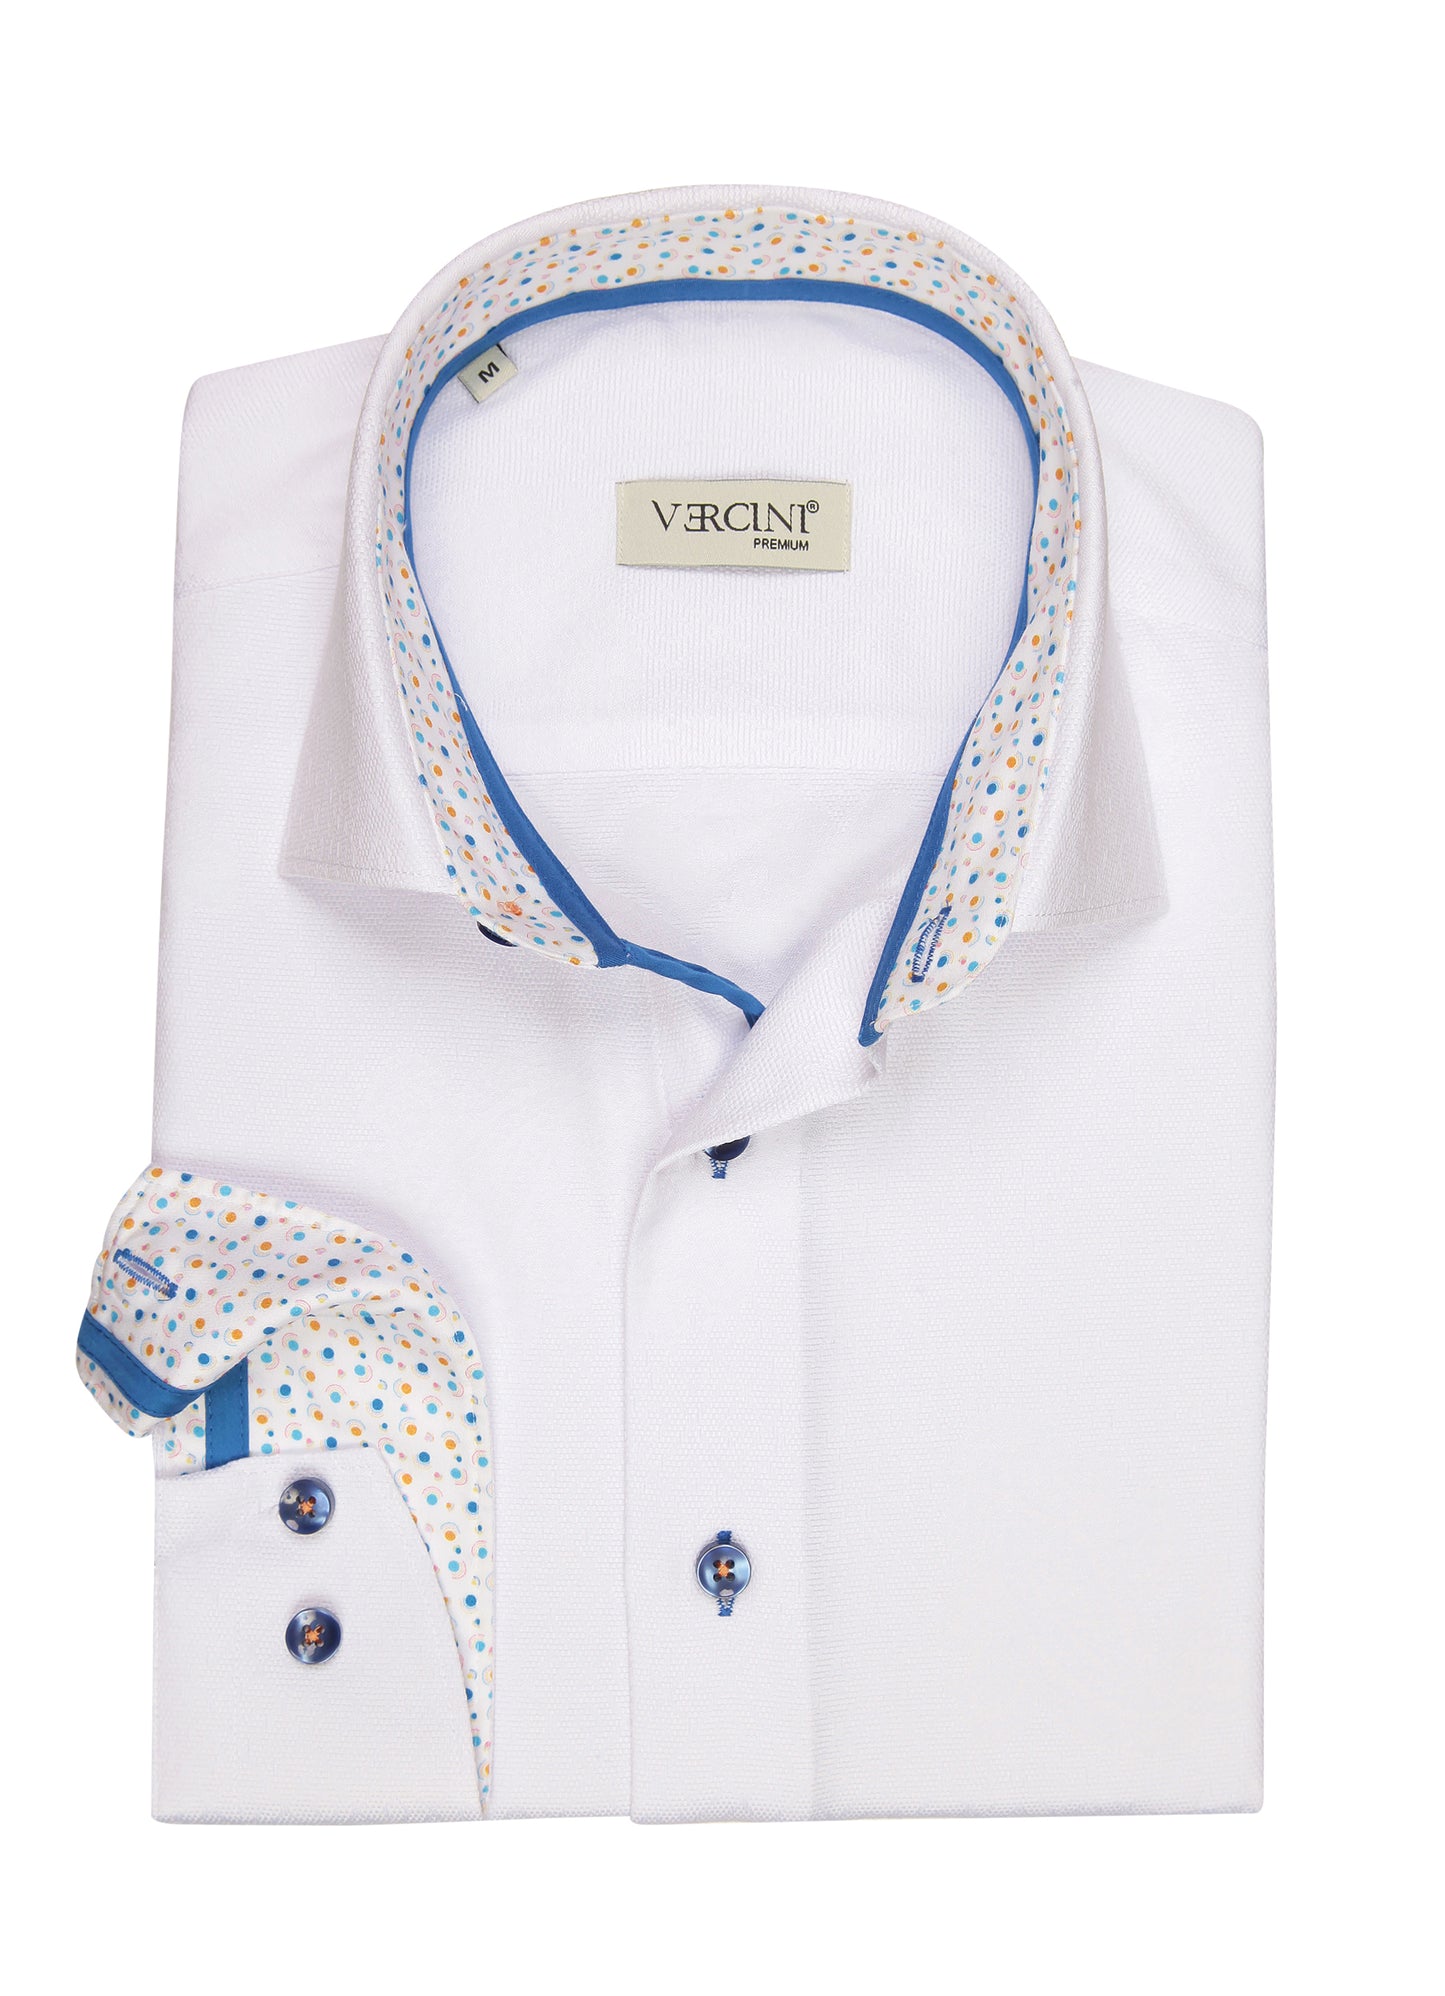 Spectrum Dot Tailored White Dress Shirt DRESS SHIRTS On Sale 30% Off Vercini